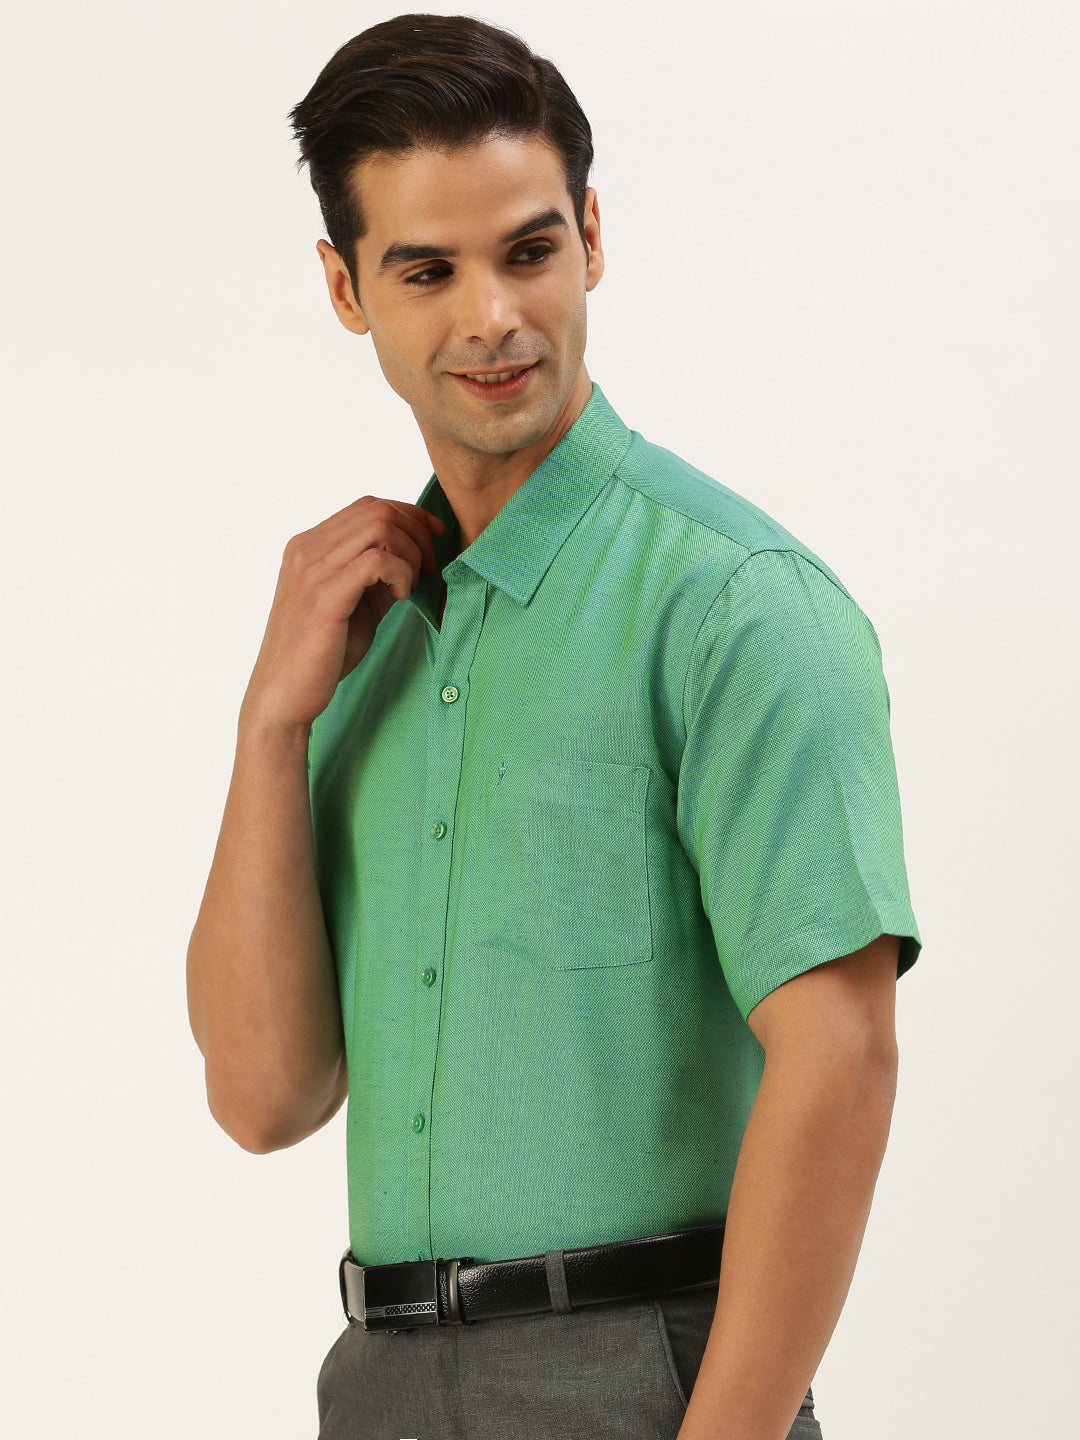 Mens Formal Shirt Half Sleeves Green CY10-Side view